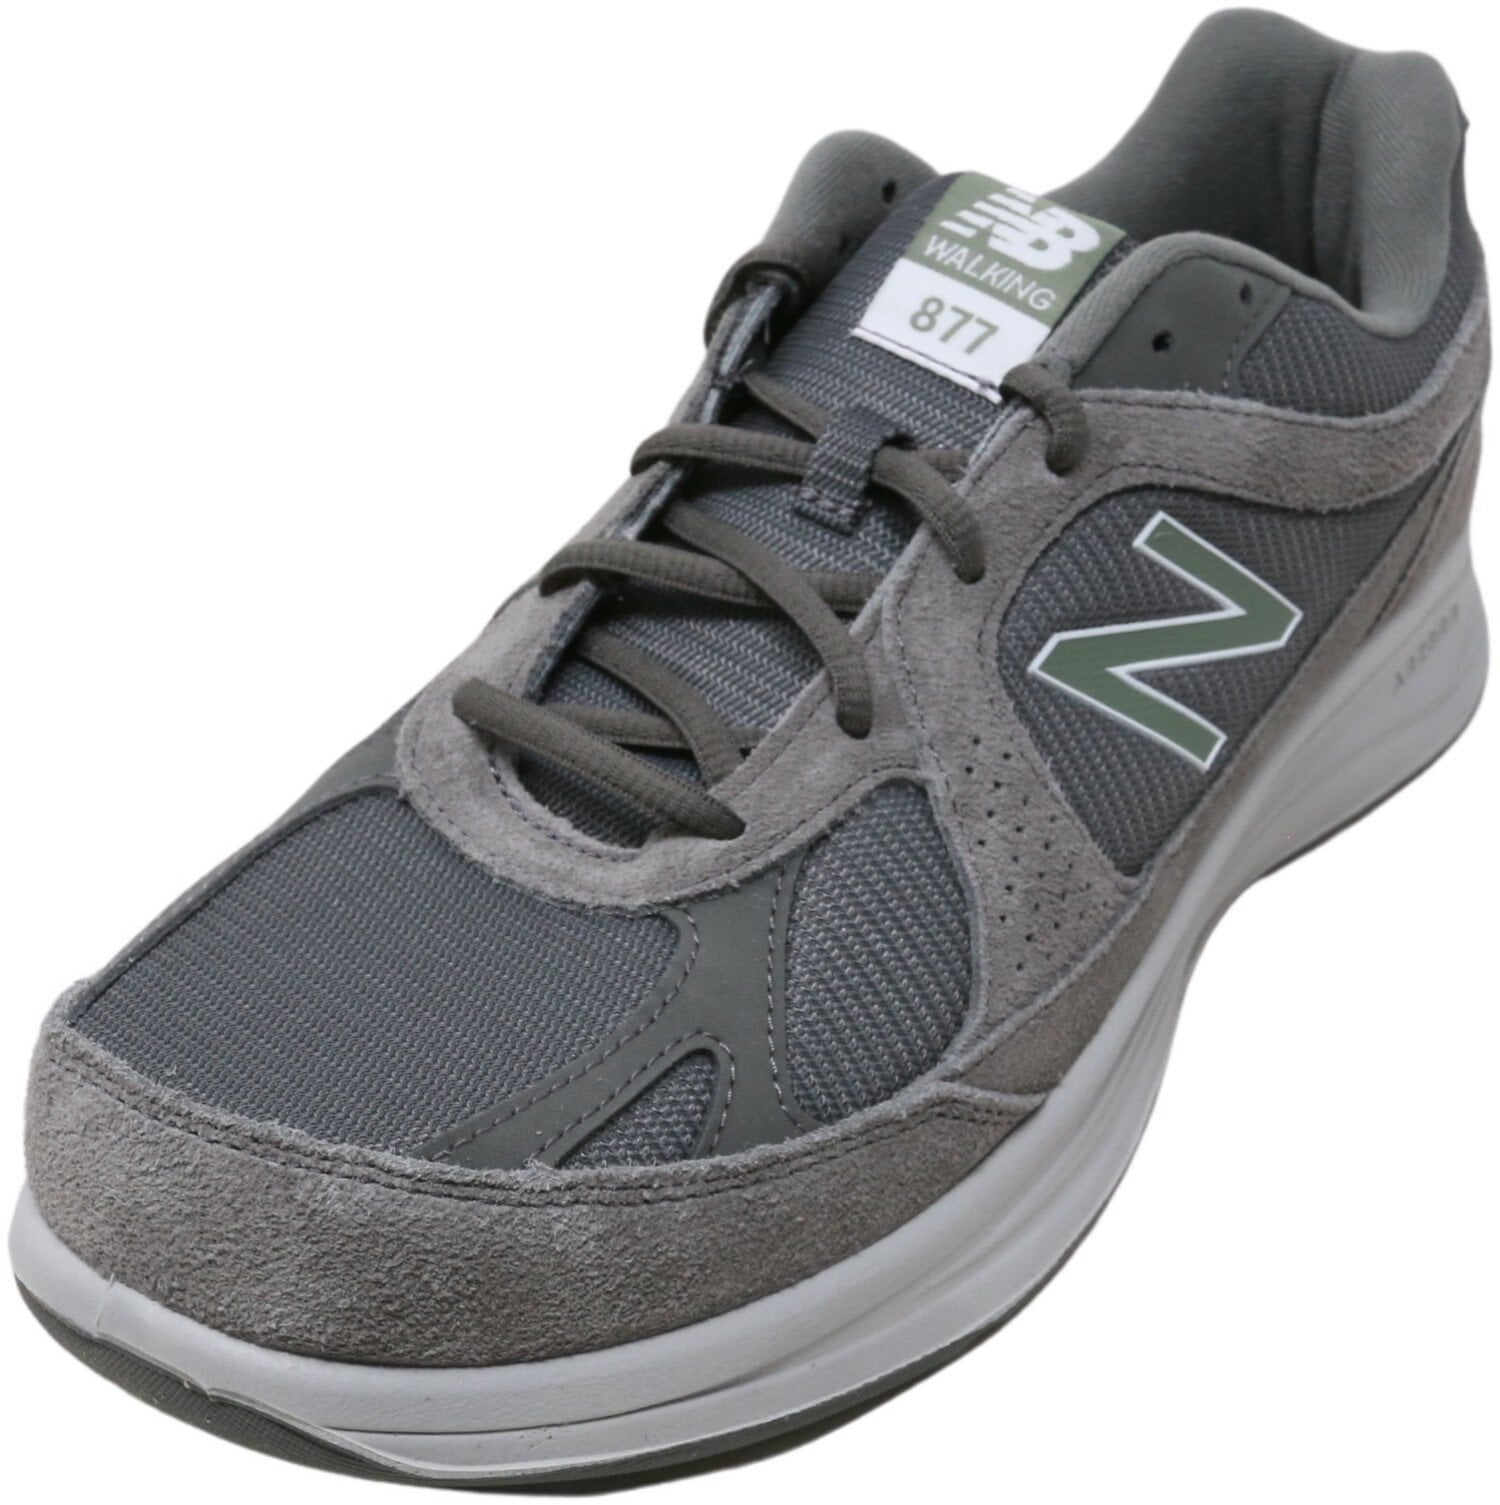 new balance men's mw877 walking shoe reviews